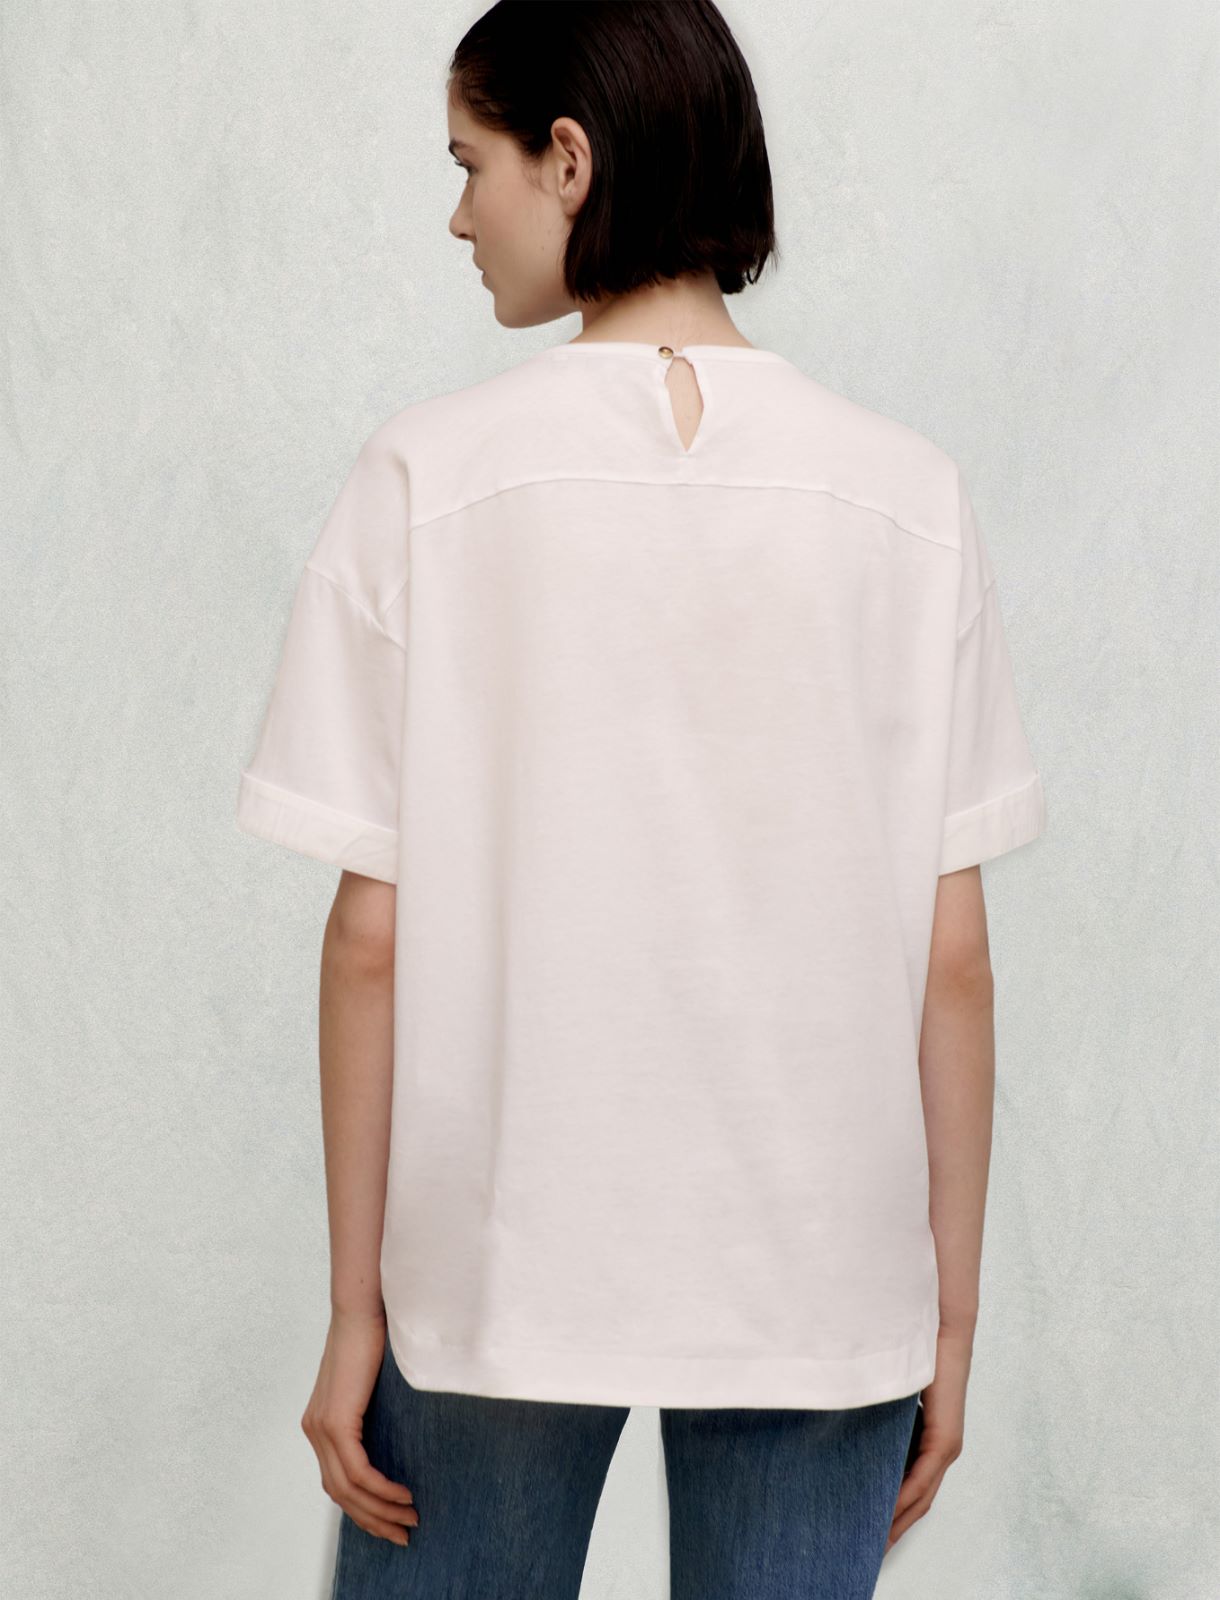 Ruched T-shirt - White - Marella - 2